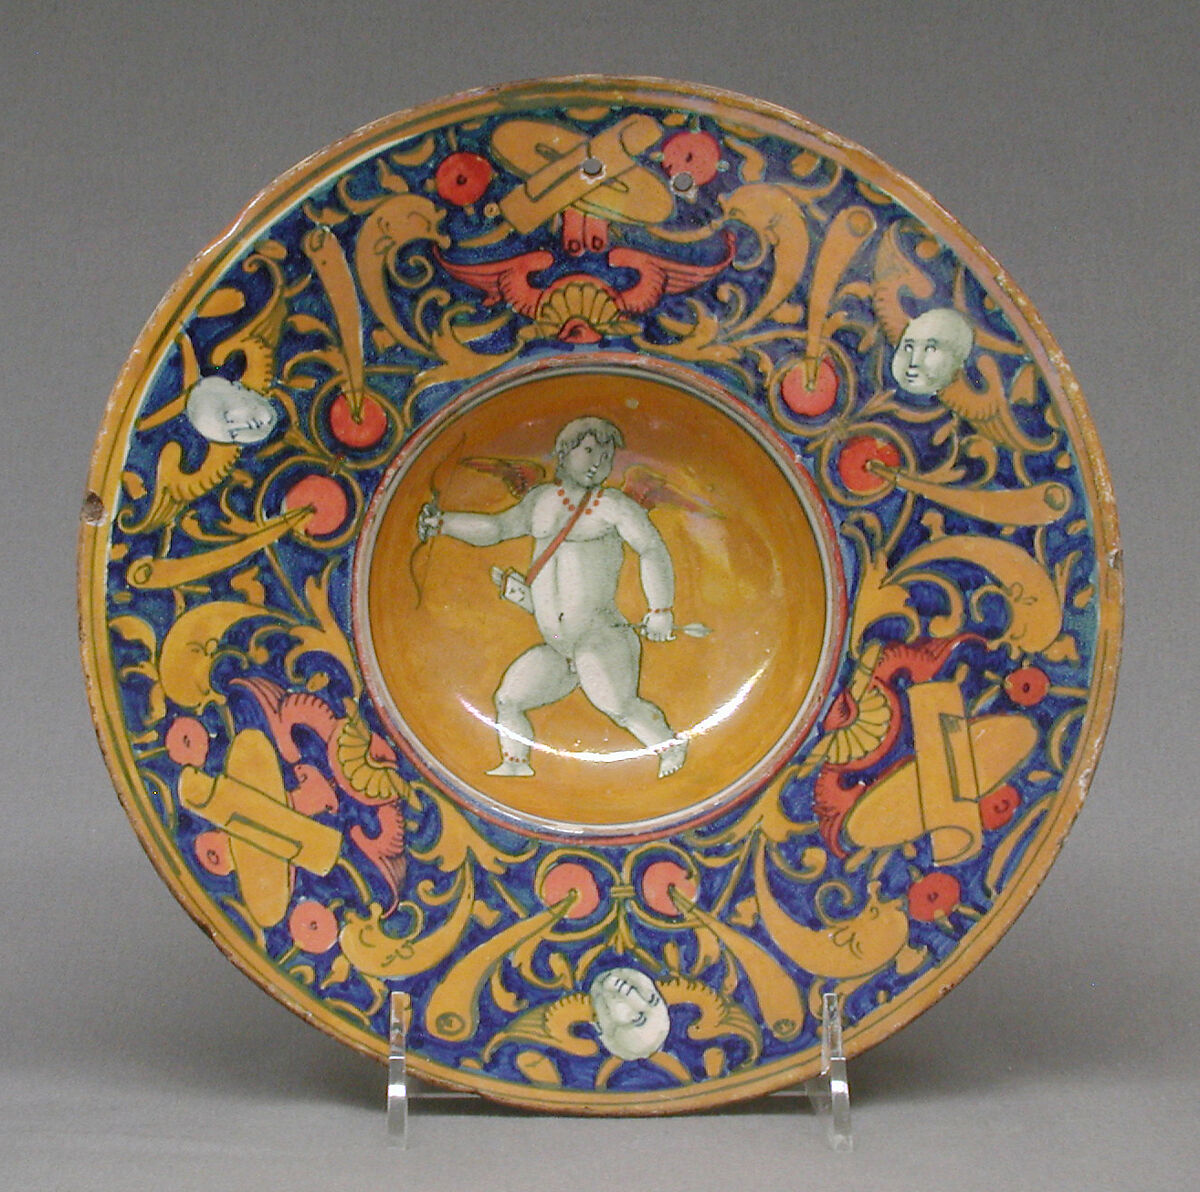 Dish (one of a pair), Style of Maestro Giorgio Andreoli (Italian (Gubbio), active first half of 16th century), Maiolica (tin-glazed earthenware), lustered, Italian, Gubbio 